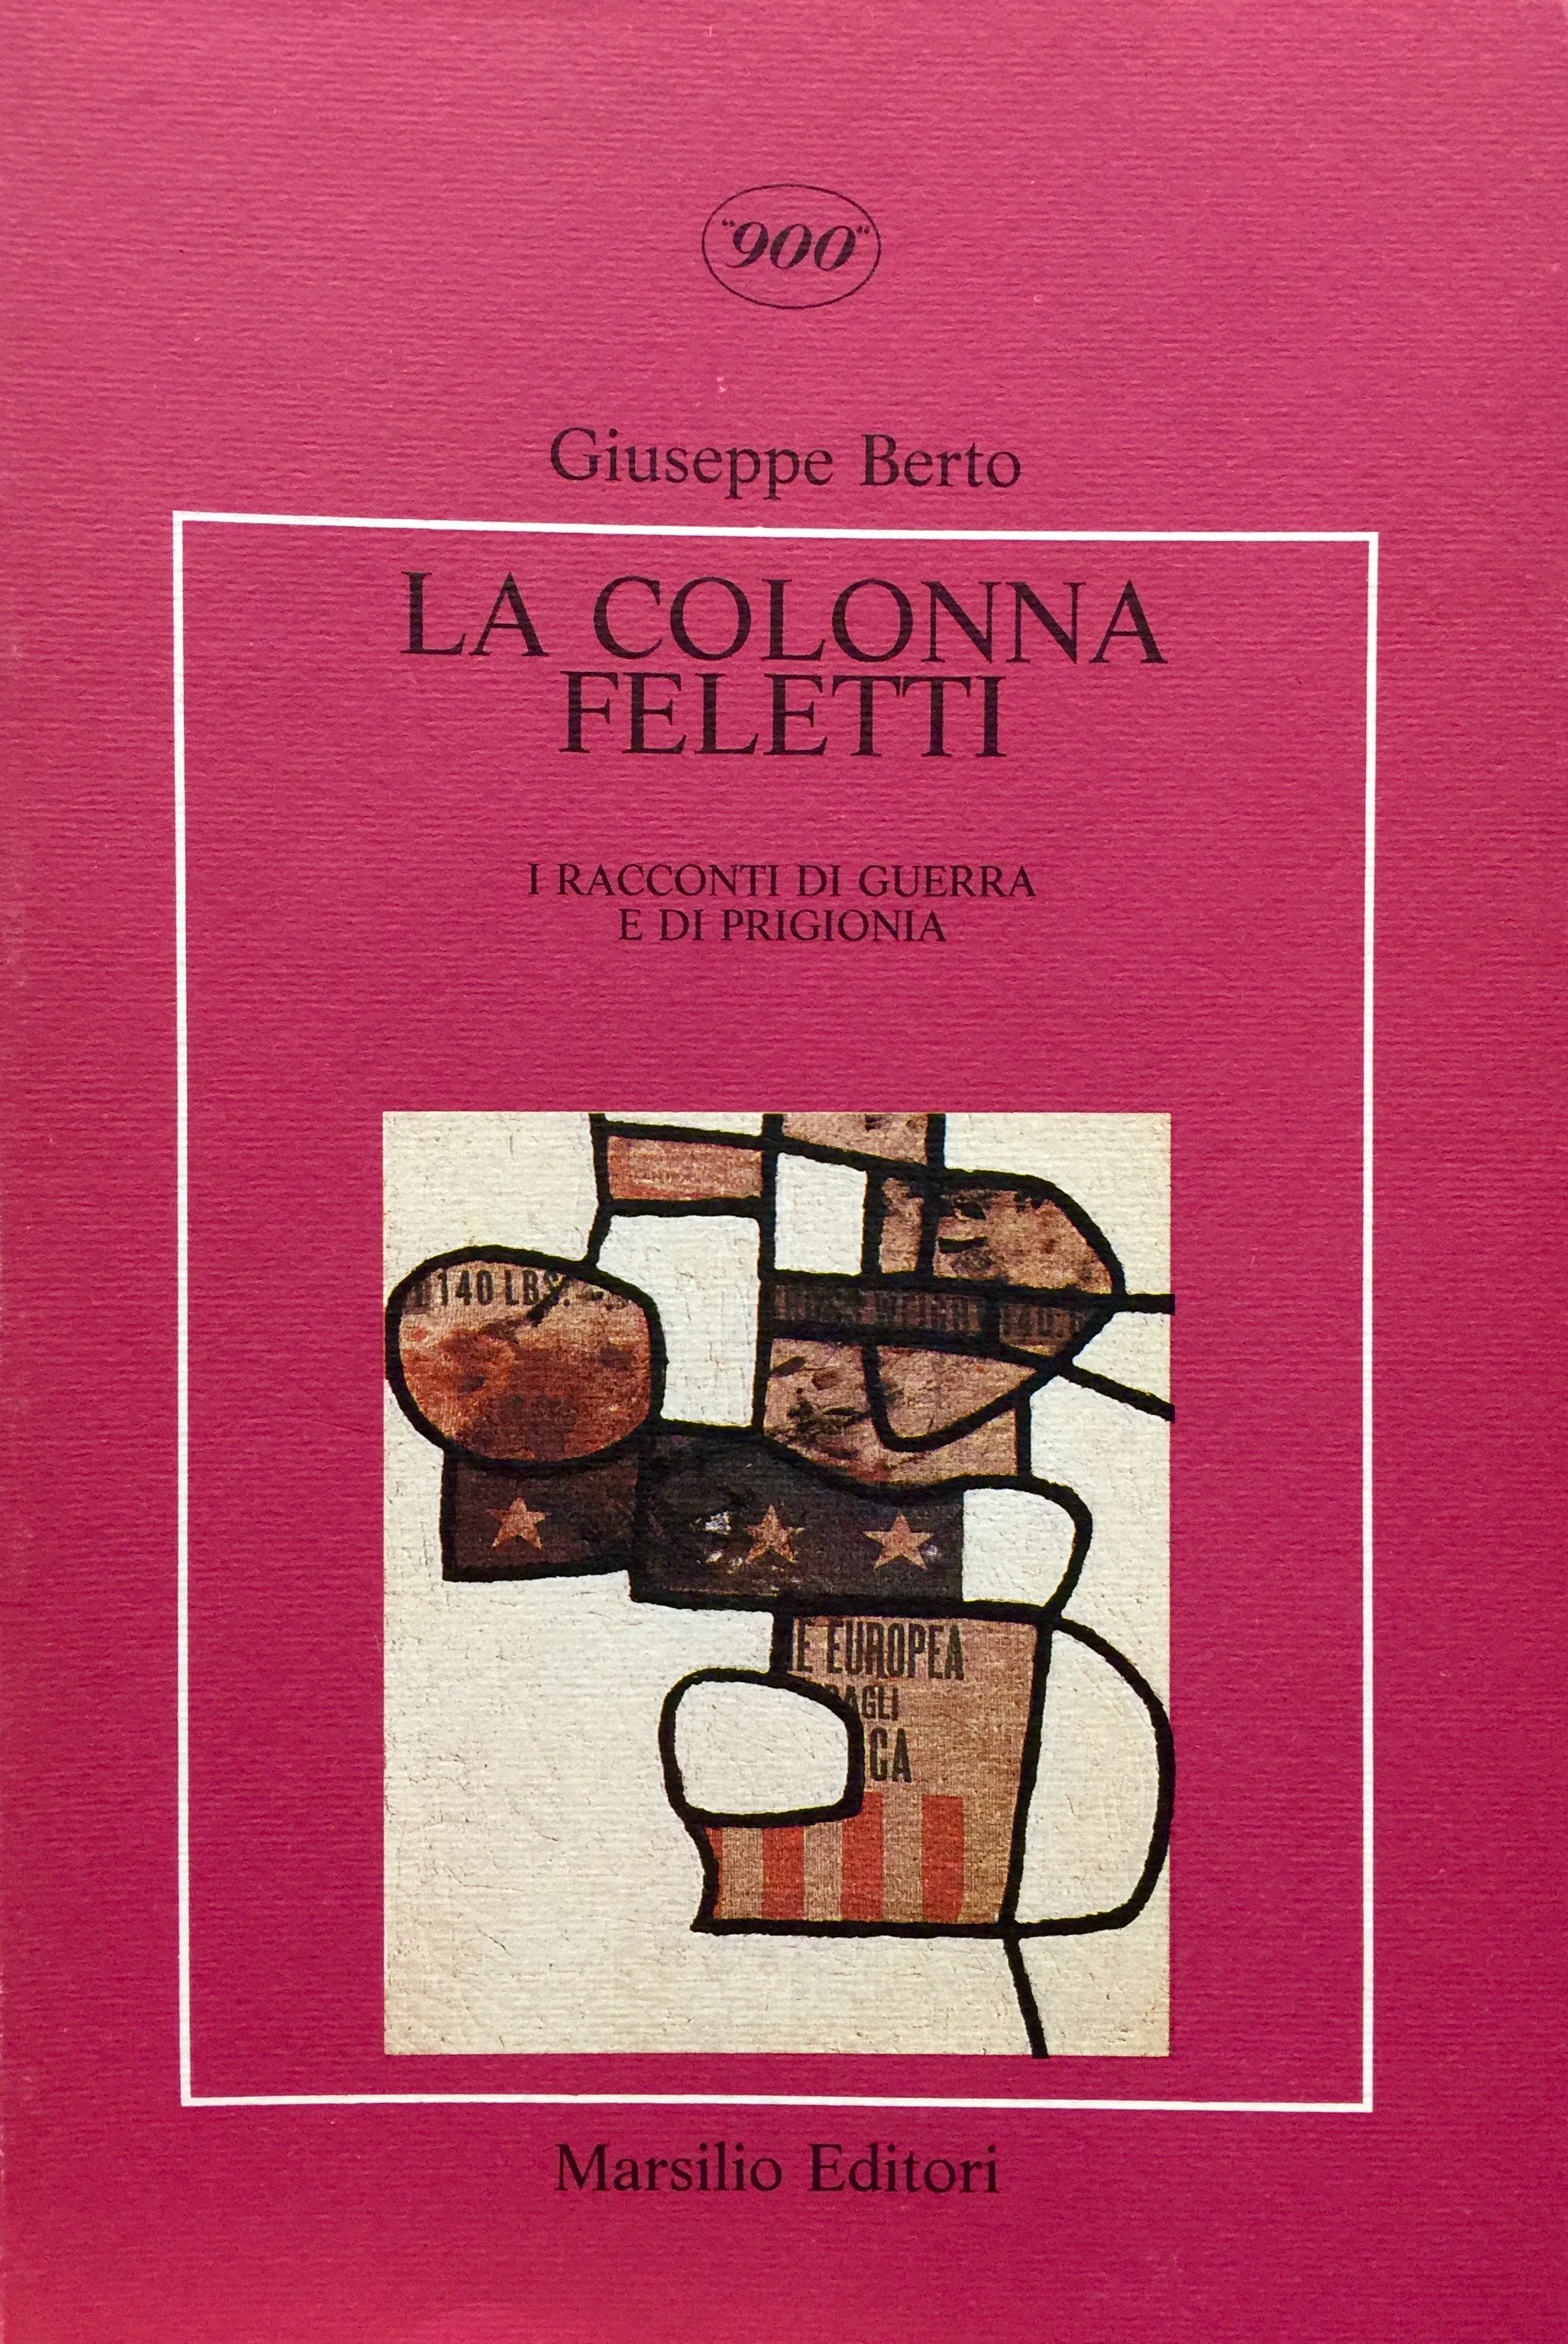 Giuseppe Berto, La colonna Feletti, Marsilio